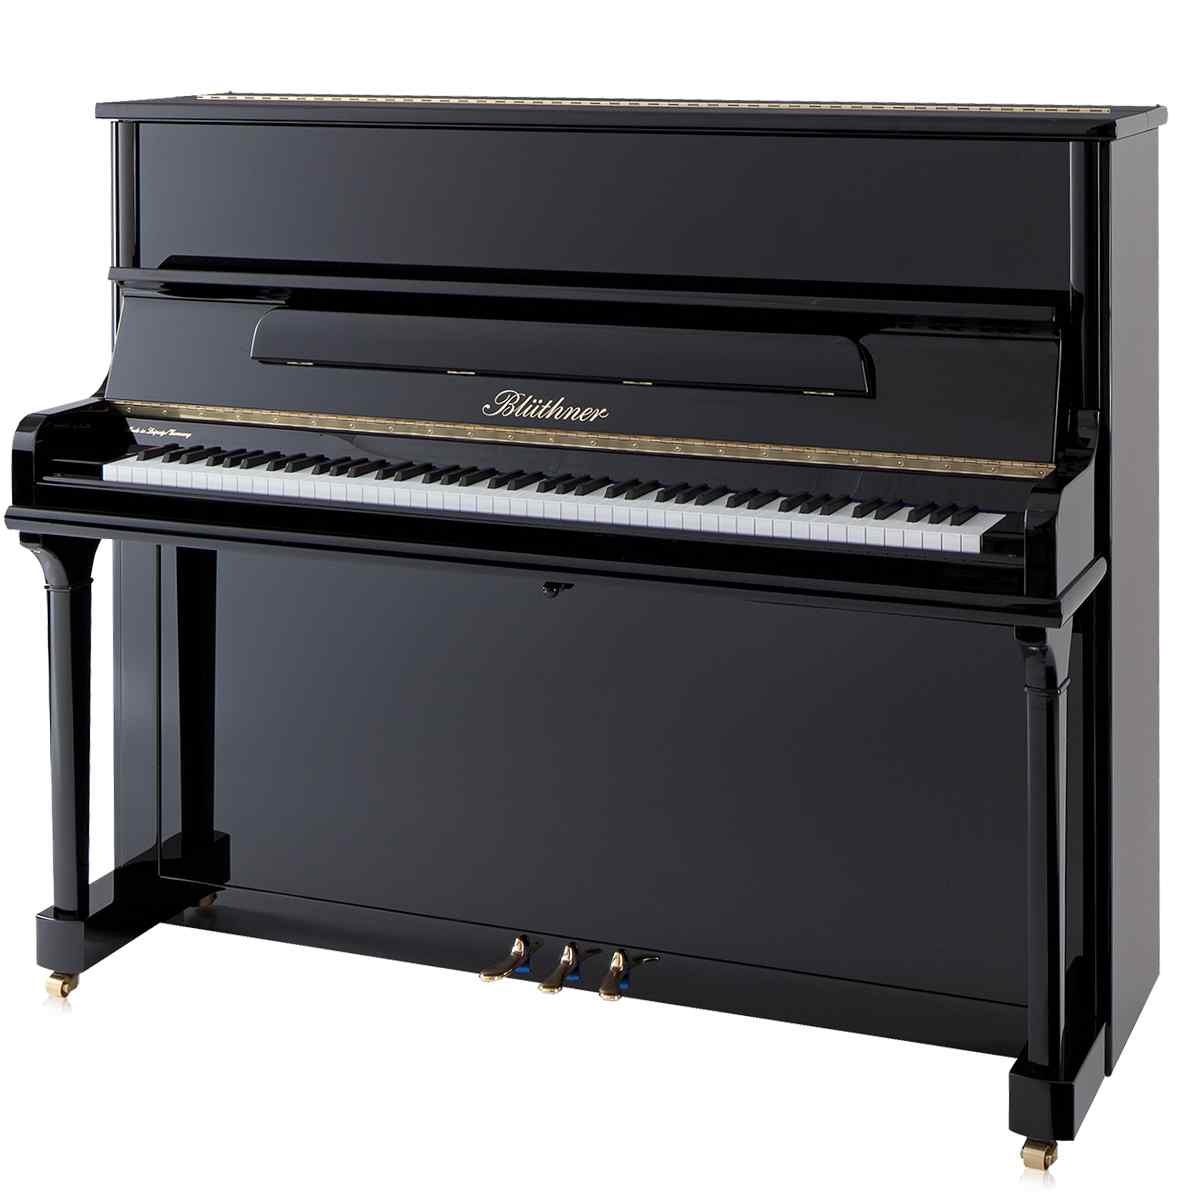 bluthner model a piano thumbnail 1180x1200 1 קטלוג פסנתרים 90